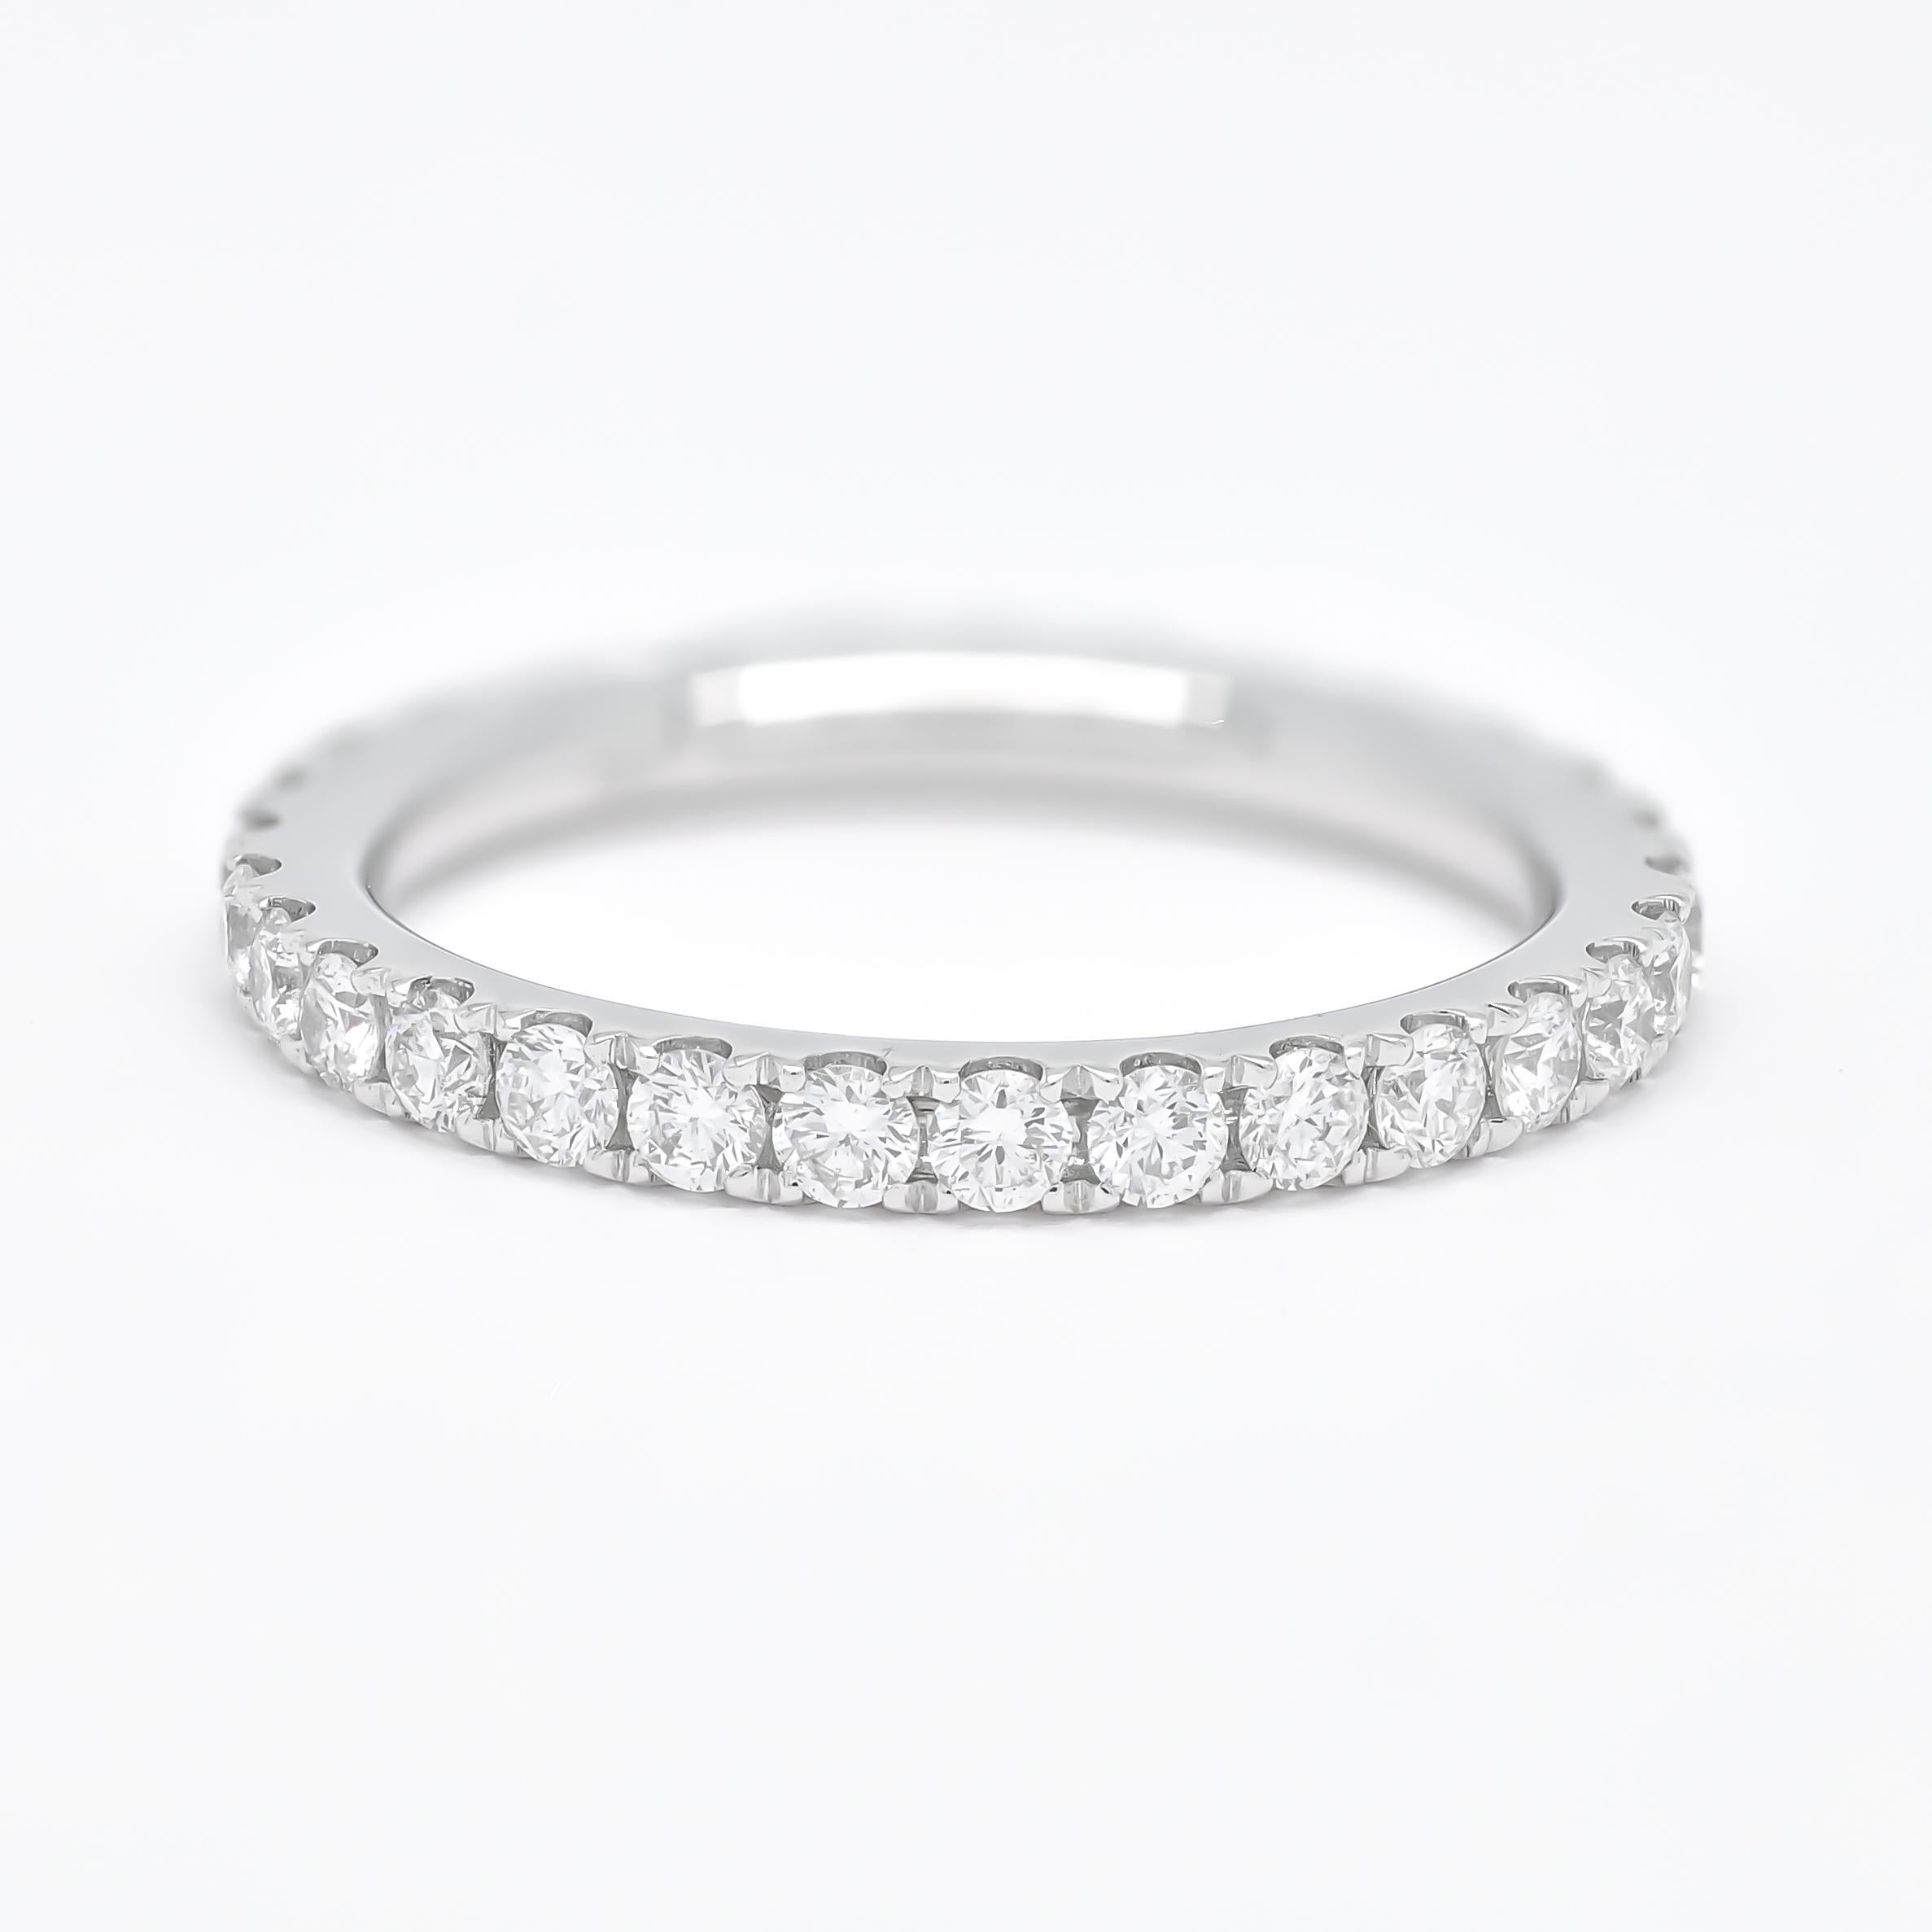 Brilliant Cut Timeless Brilliance: 1.11 Carat Diamond Eternity Ring in 18 Karat White Gold For Sale